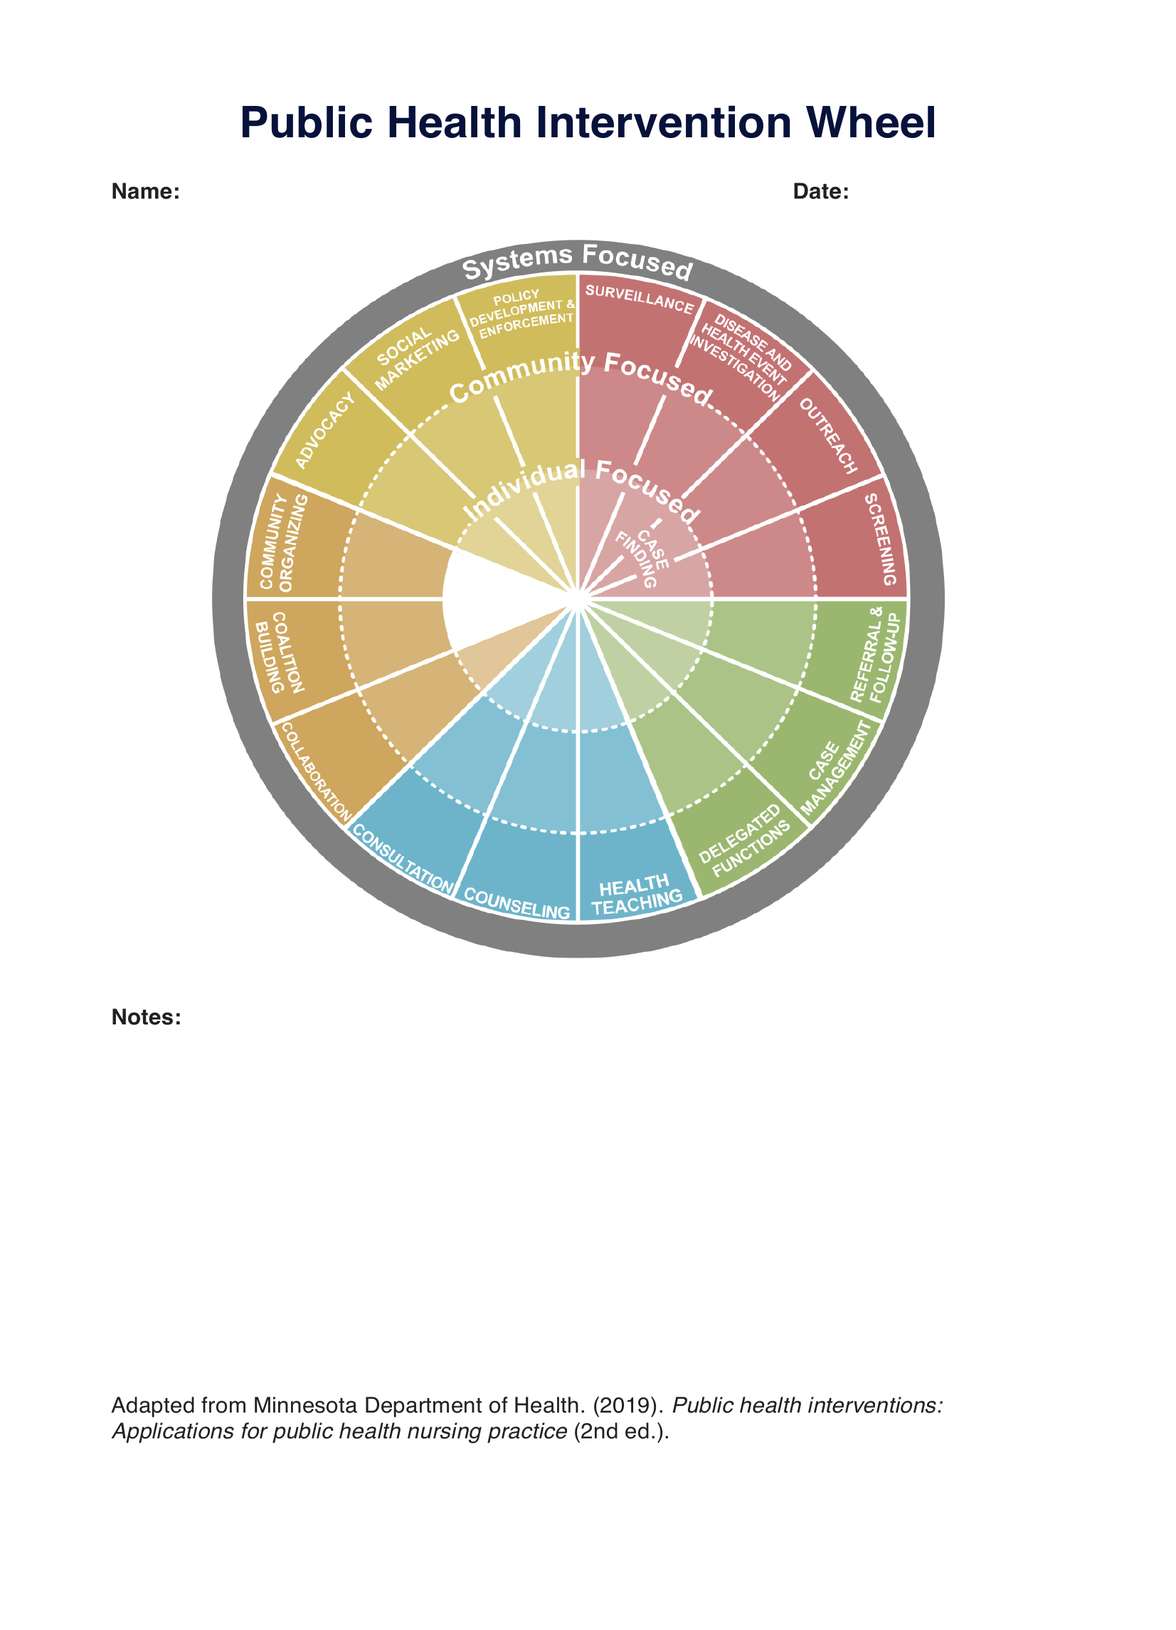 Public Health Intervention Wheel PDF Example